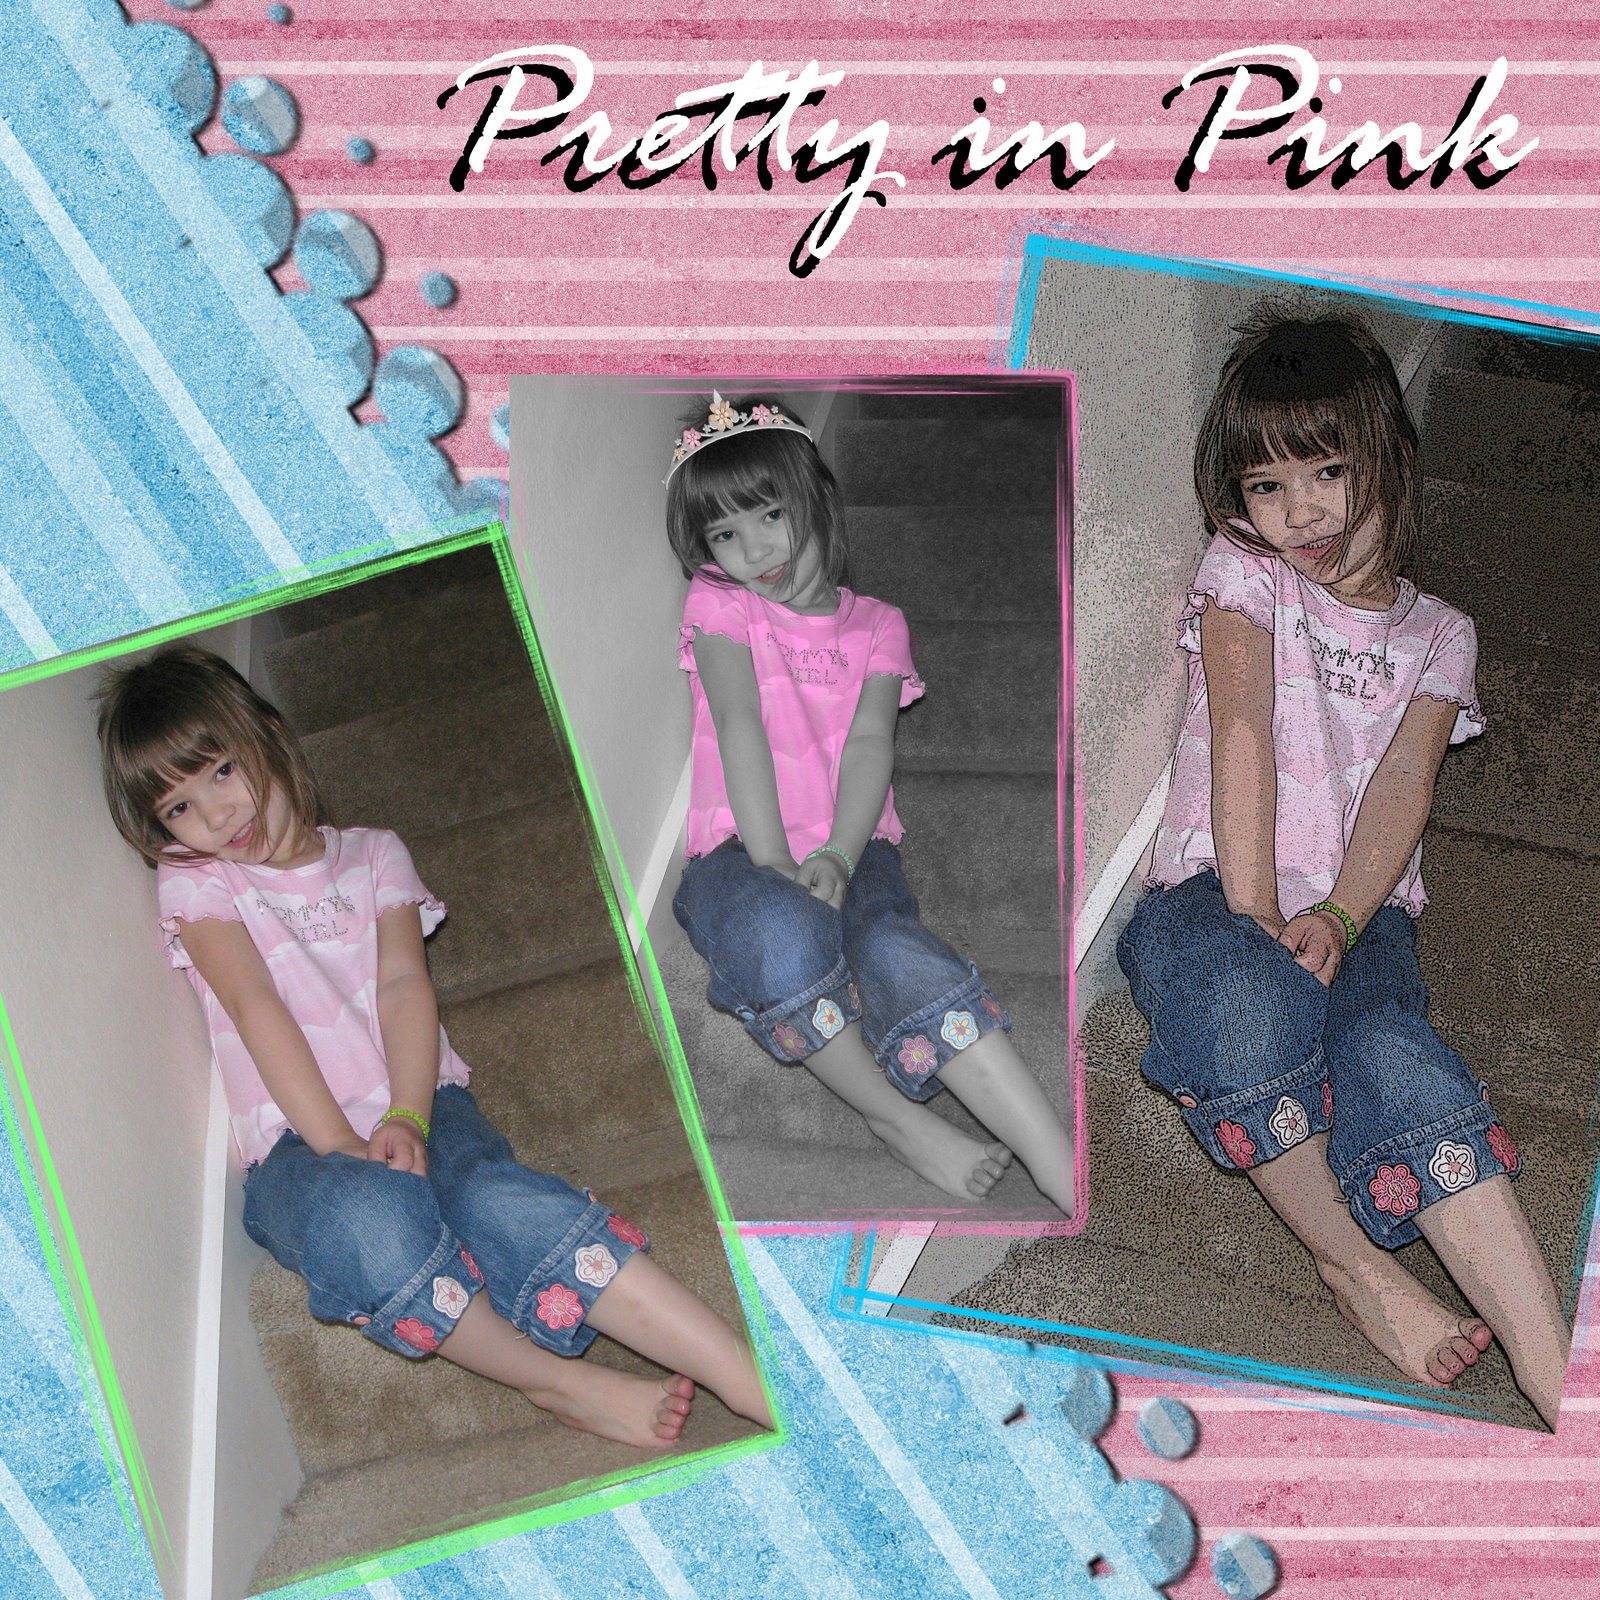 [ashleigh_pretty+in+pink-AprilCotton.jpg]